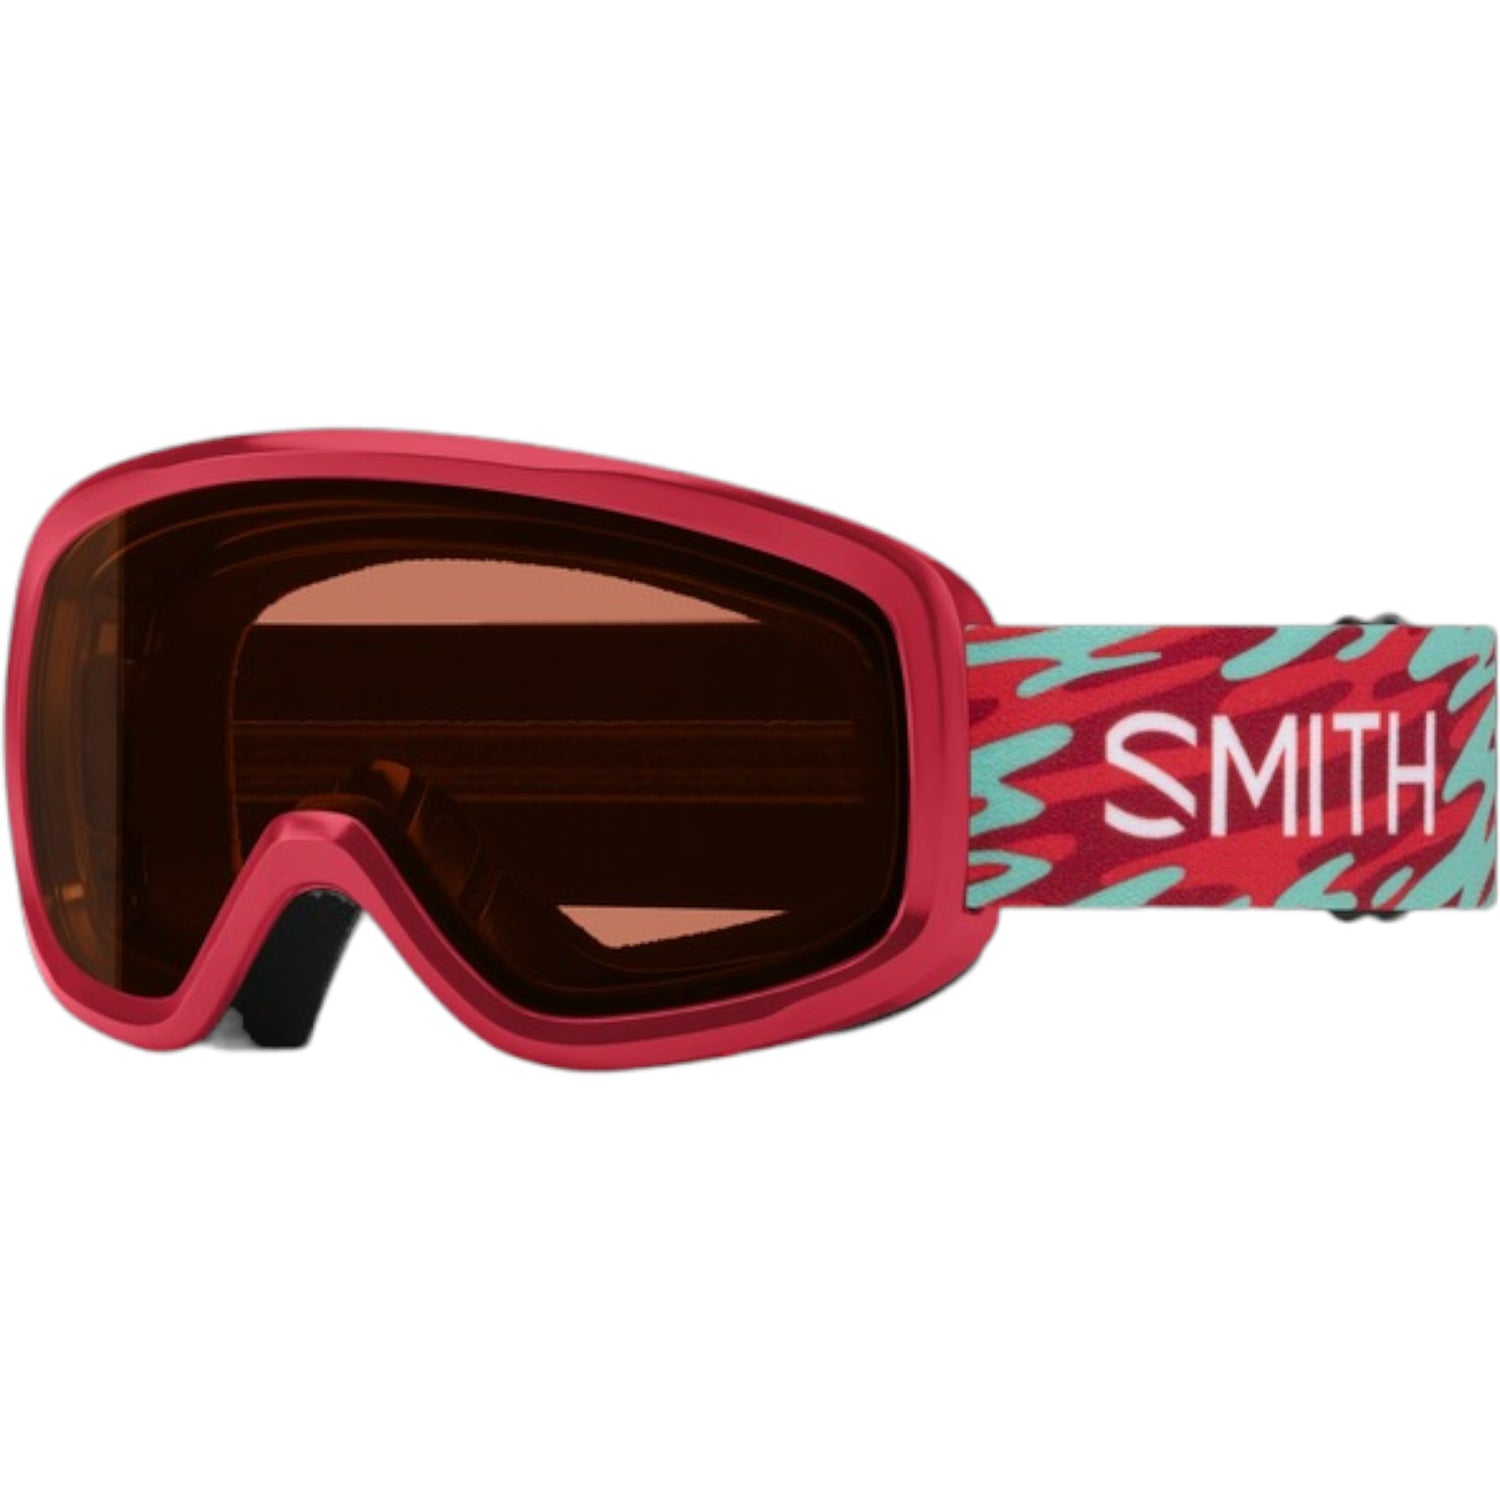 Snowday Junior Ski Goggles